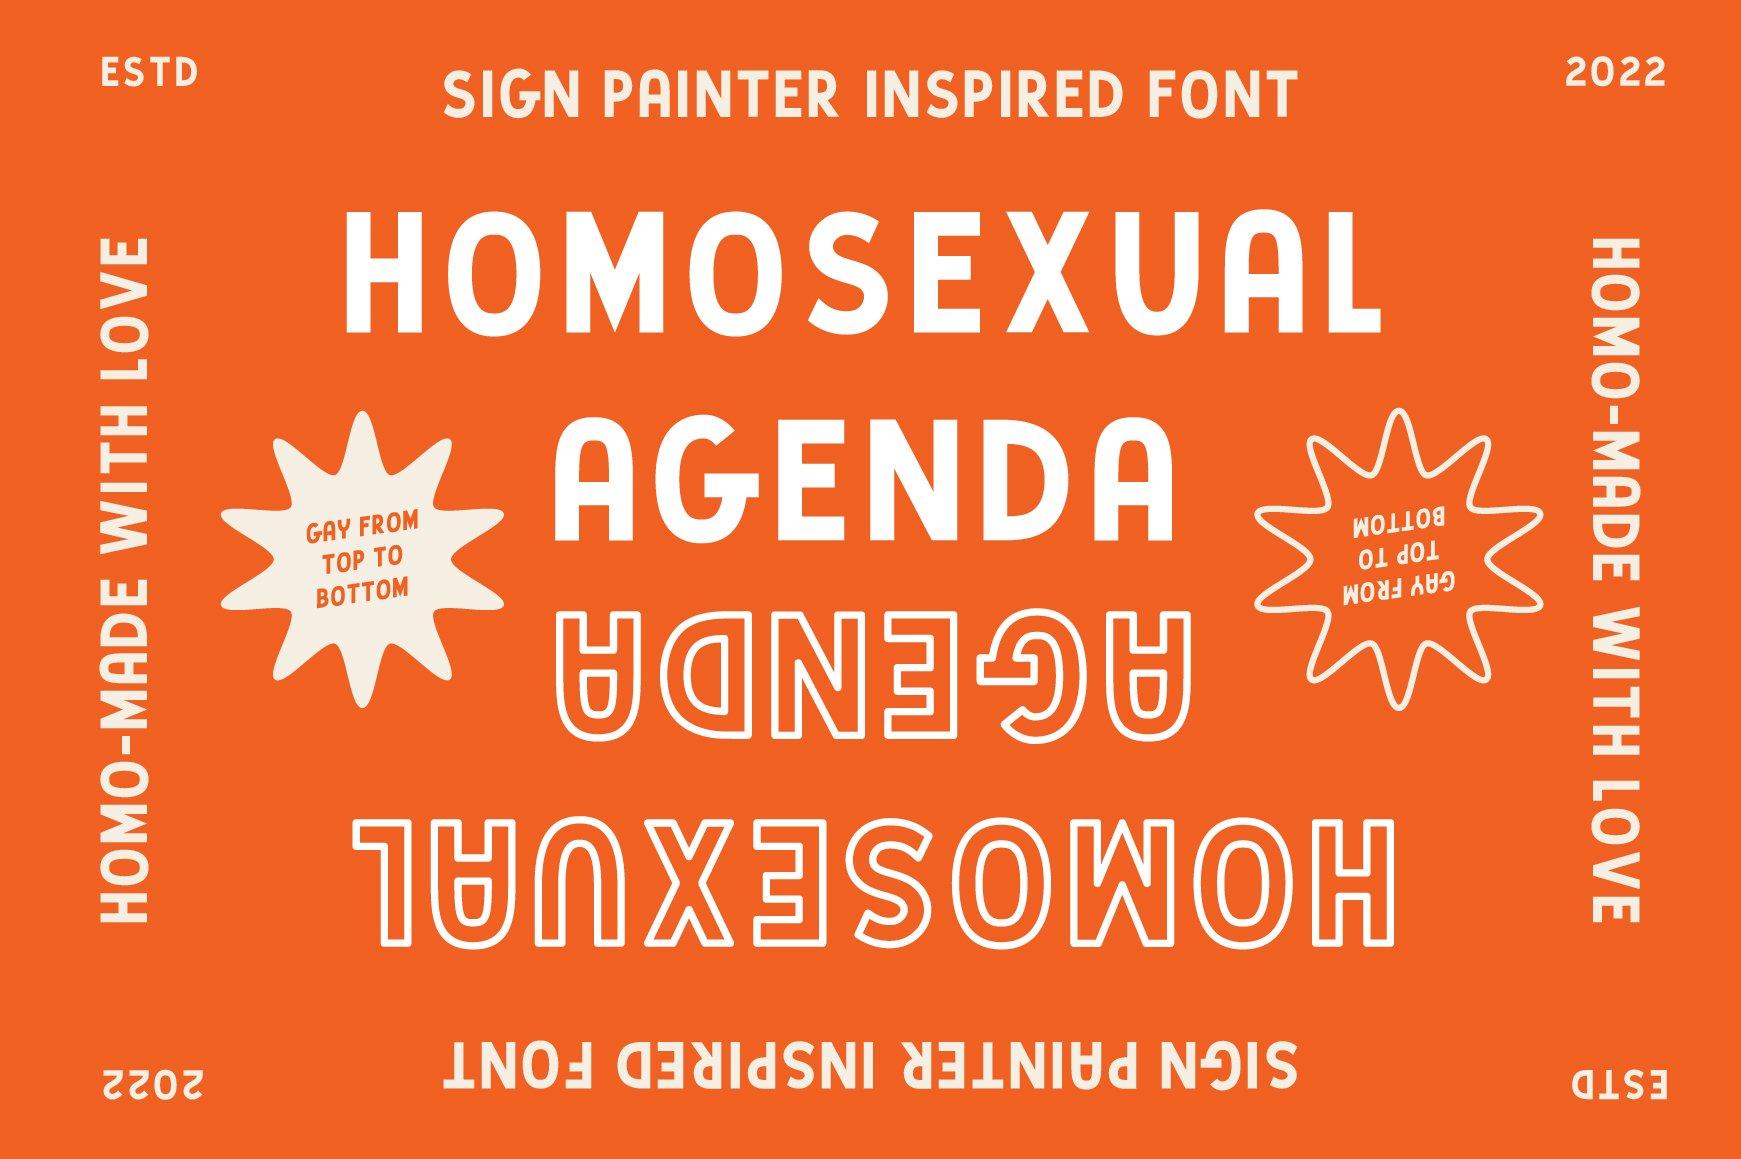 homosexual agenda trc 12 651